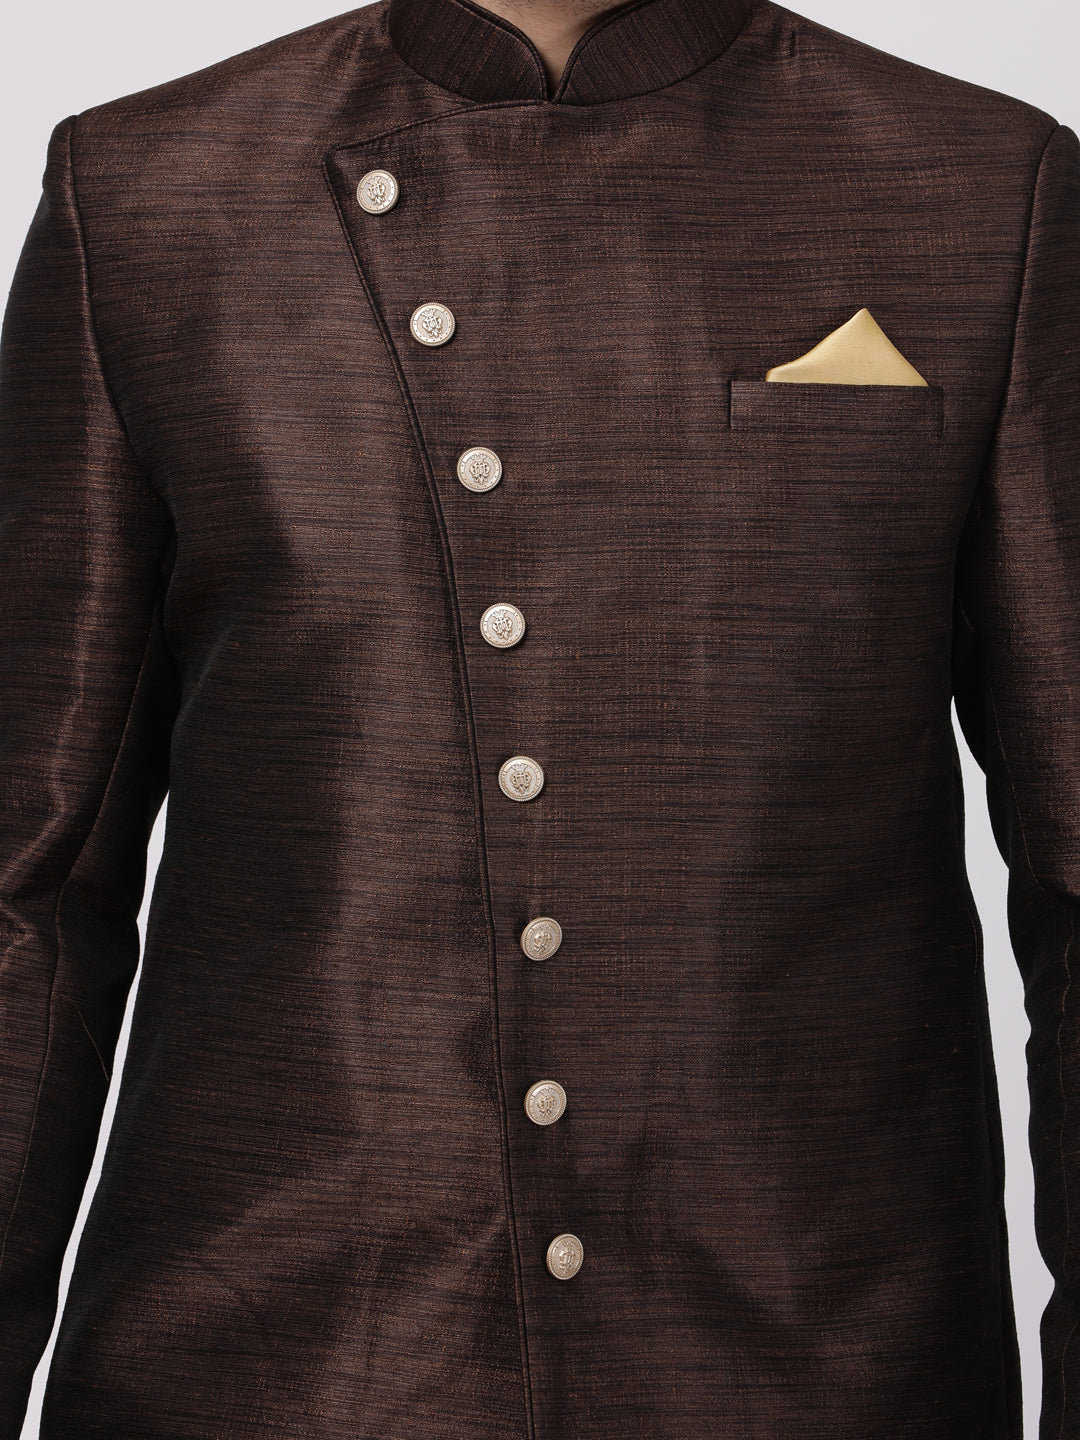 VM By VASTRAMAY Men's Brown Silk Blend Sherwani Only Top